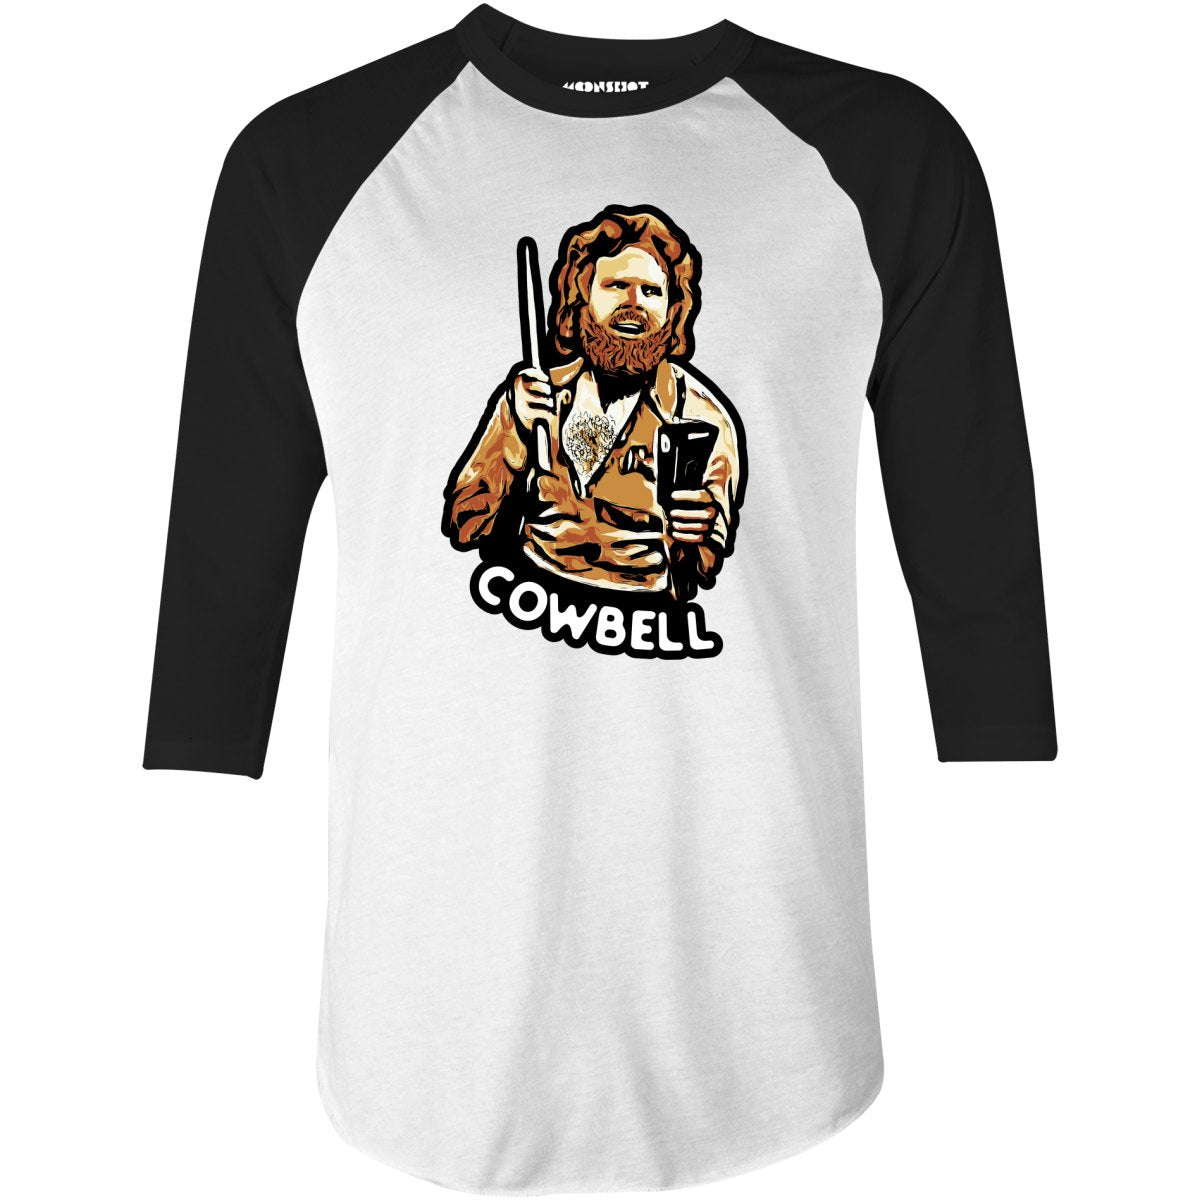 More Cowbell - 3/4 Sleeve Raglan T-Shirt